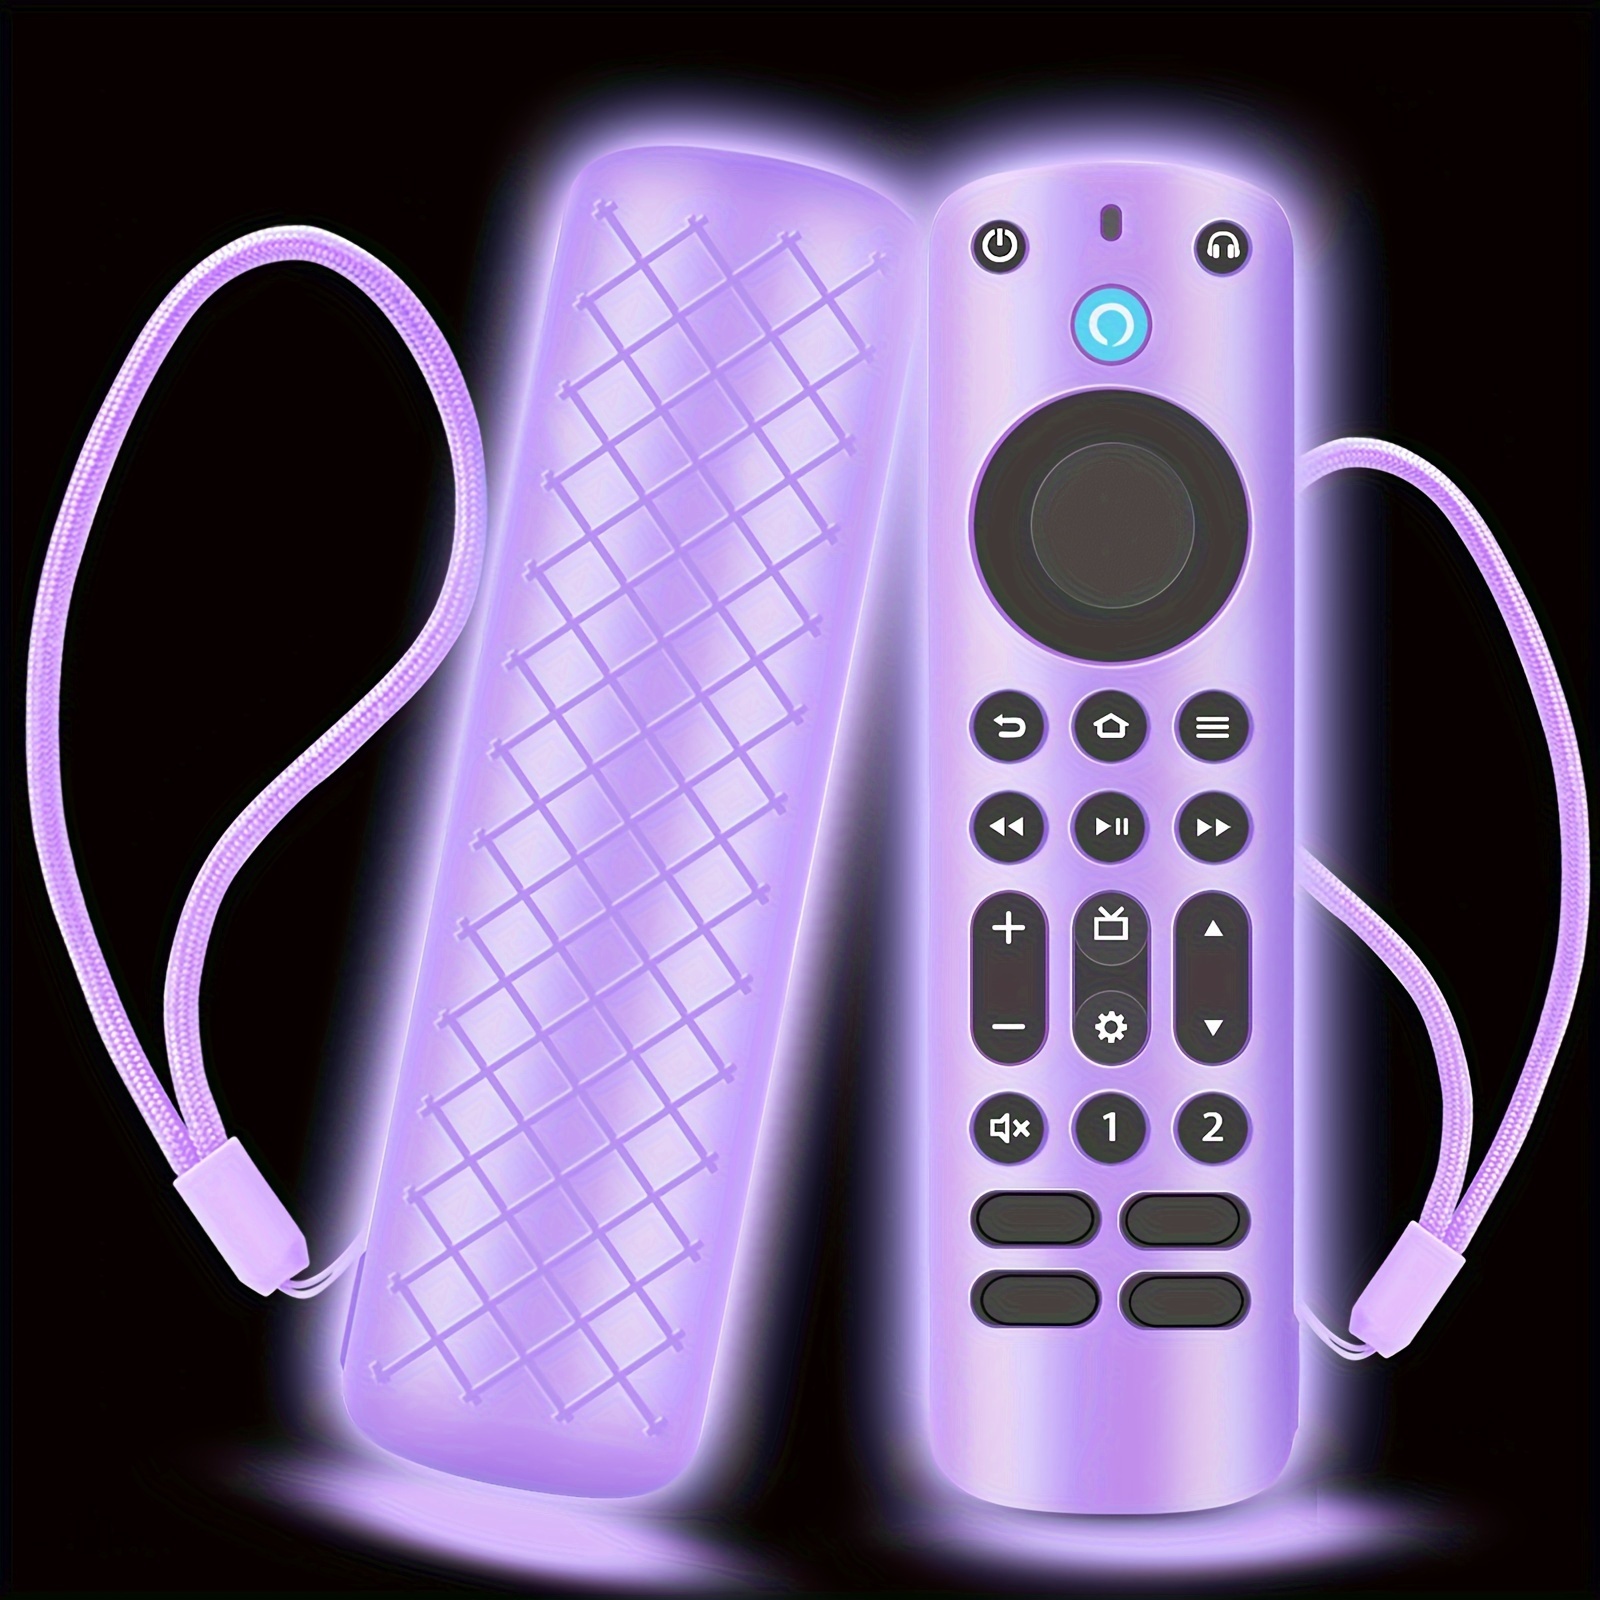 Fire TV Stick 4K with Alexa Voice Remote Pro 